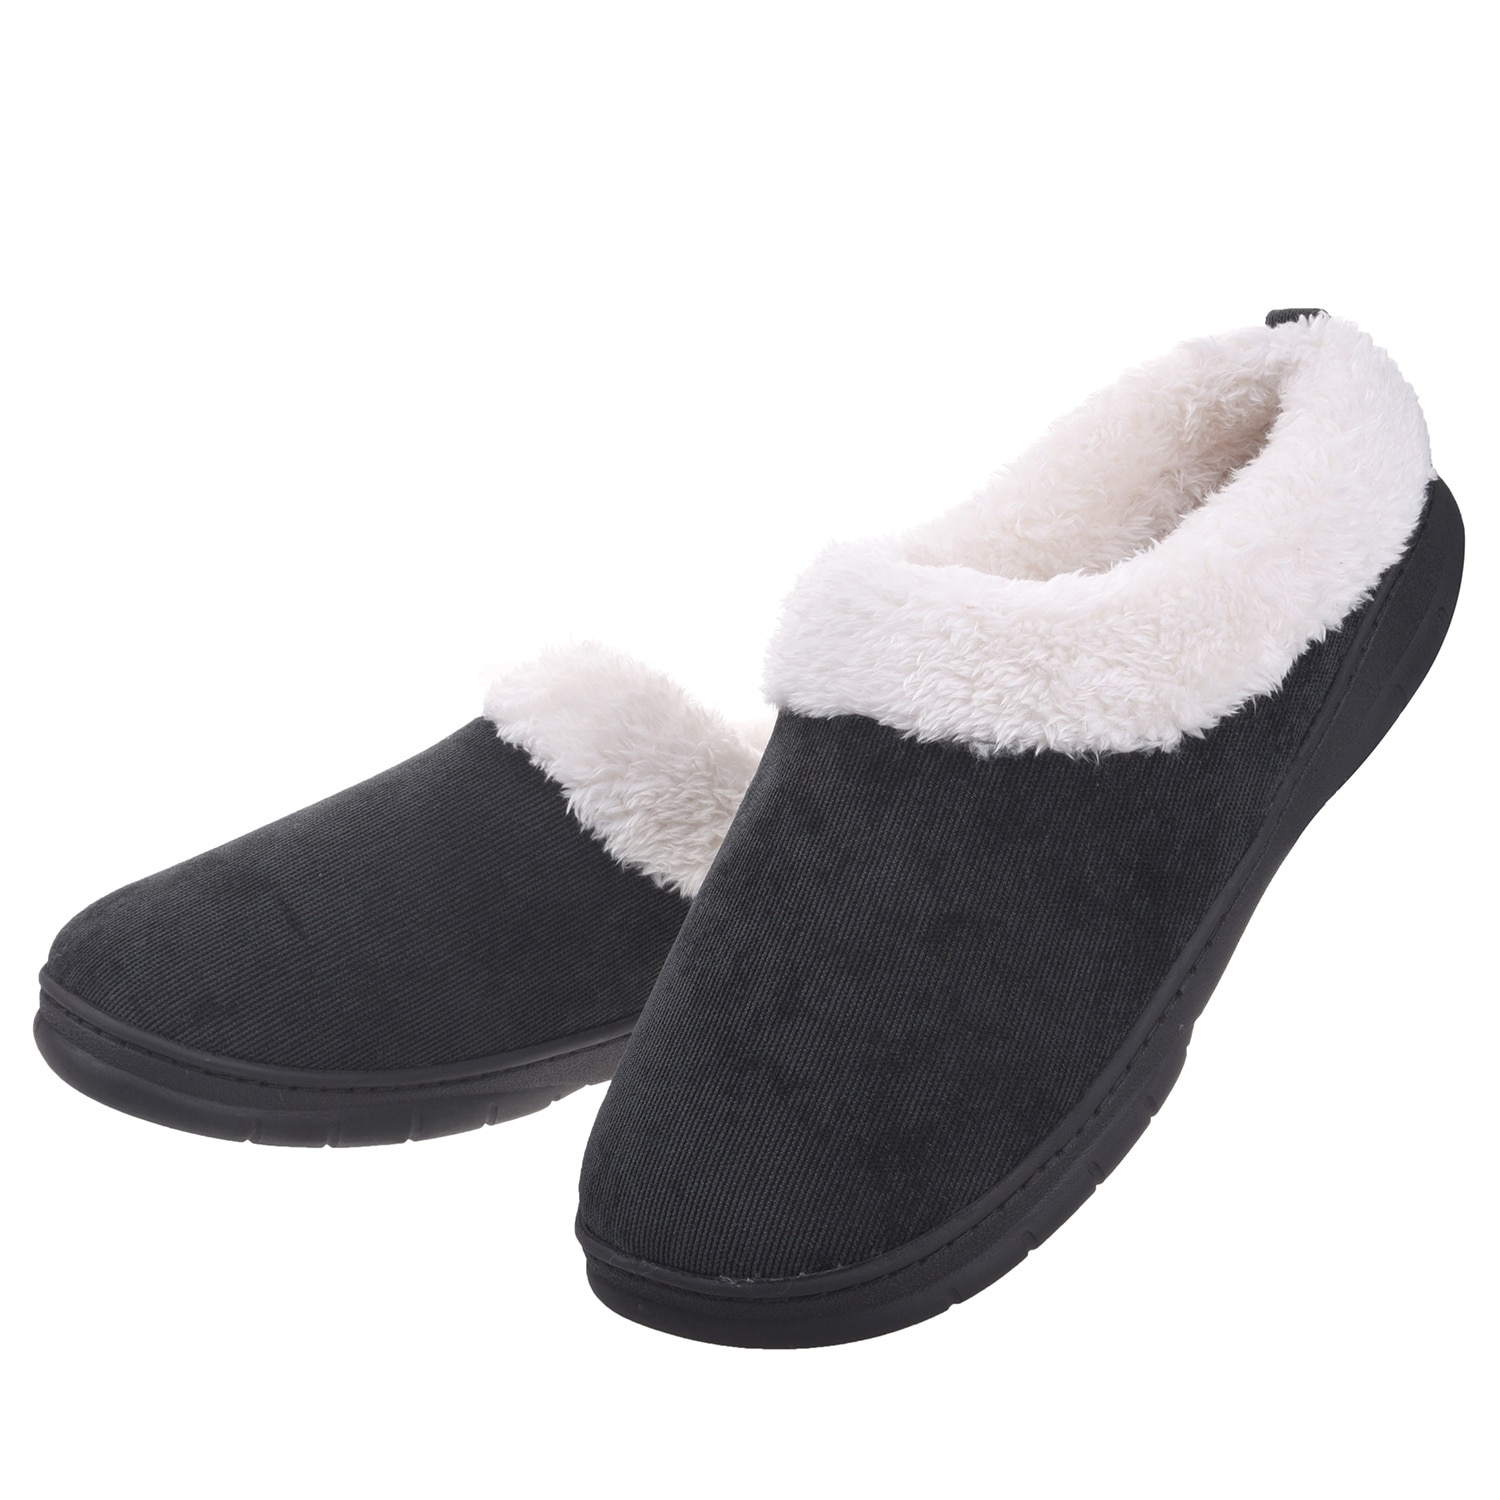 fleece lined slip on shoes